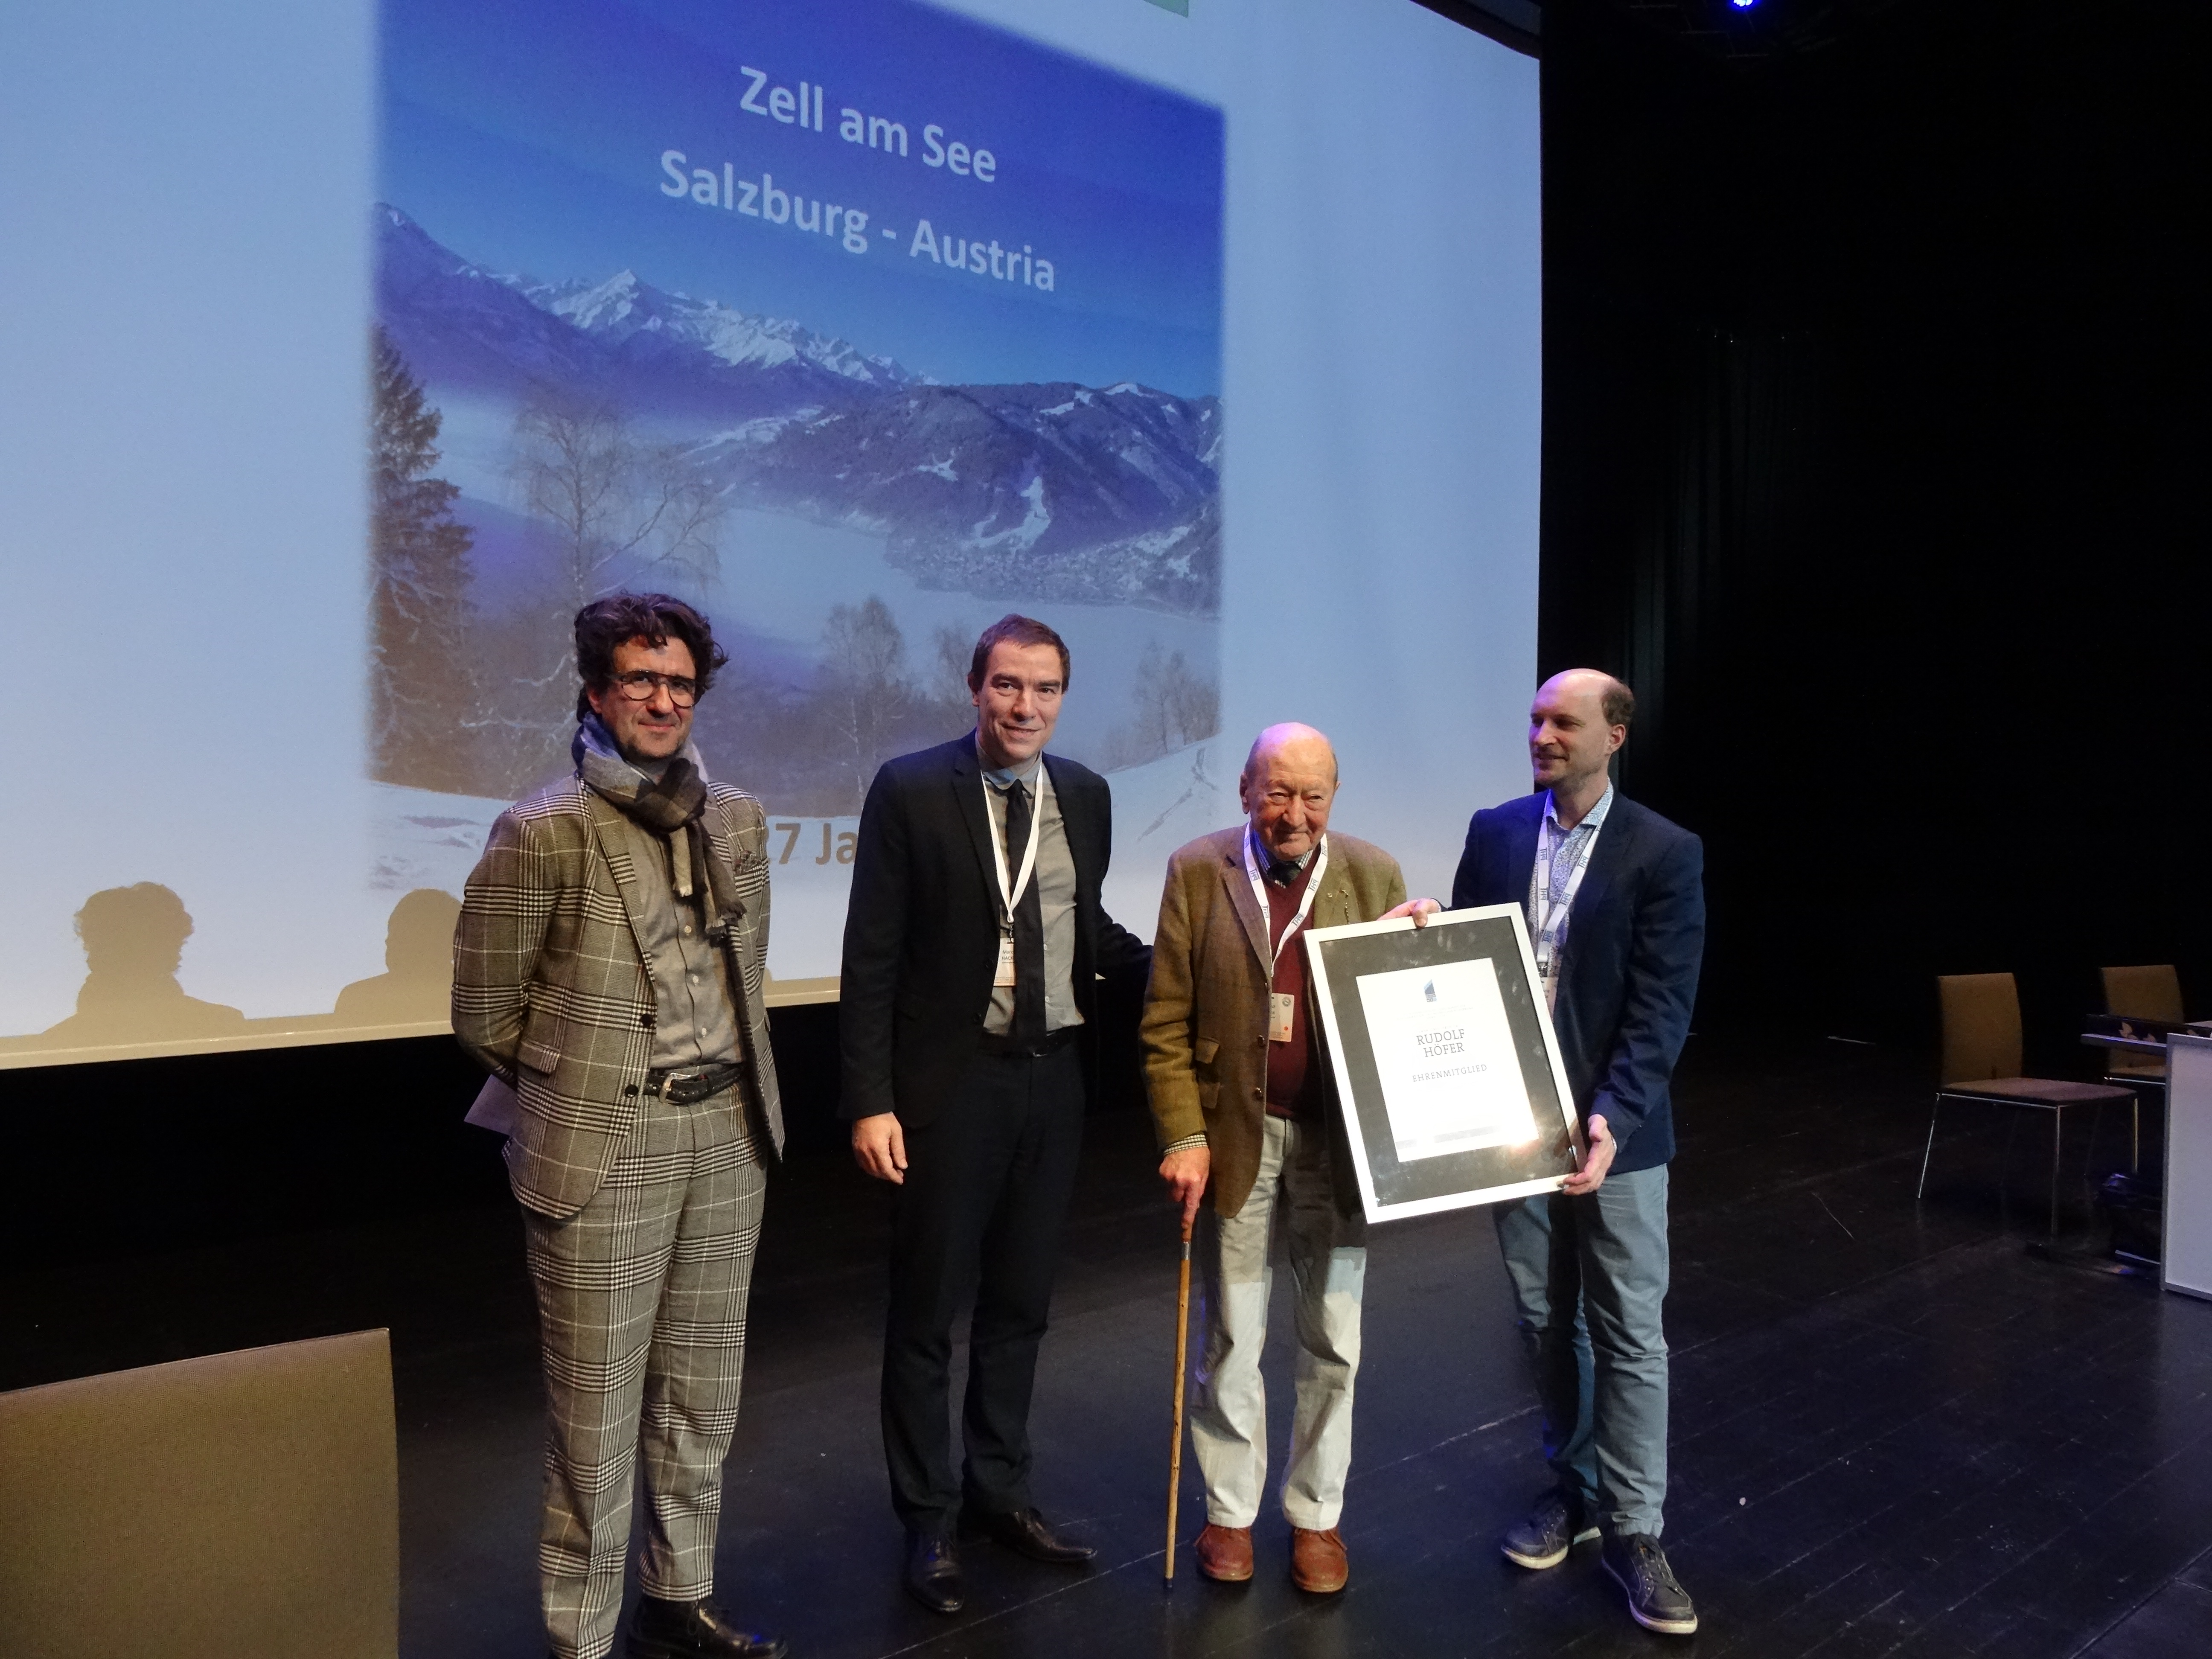 Rudolf Höfer receives his award